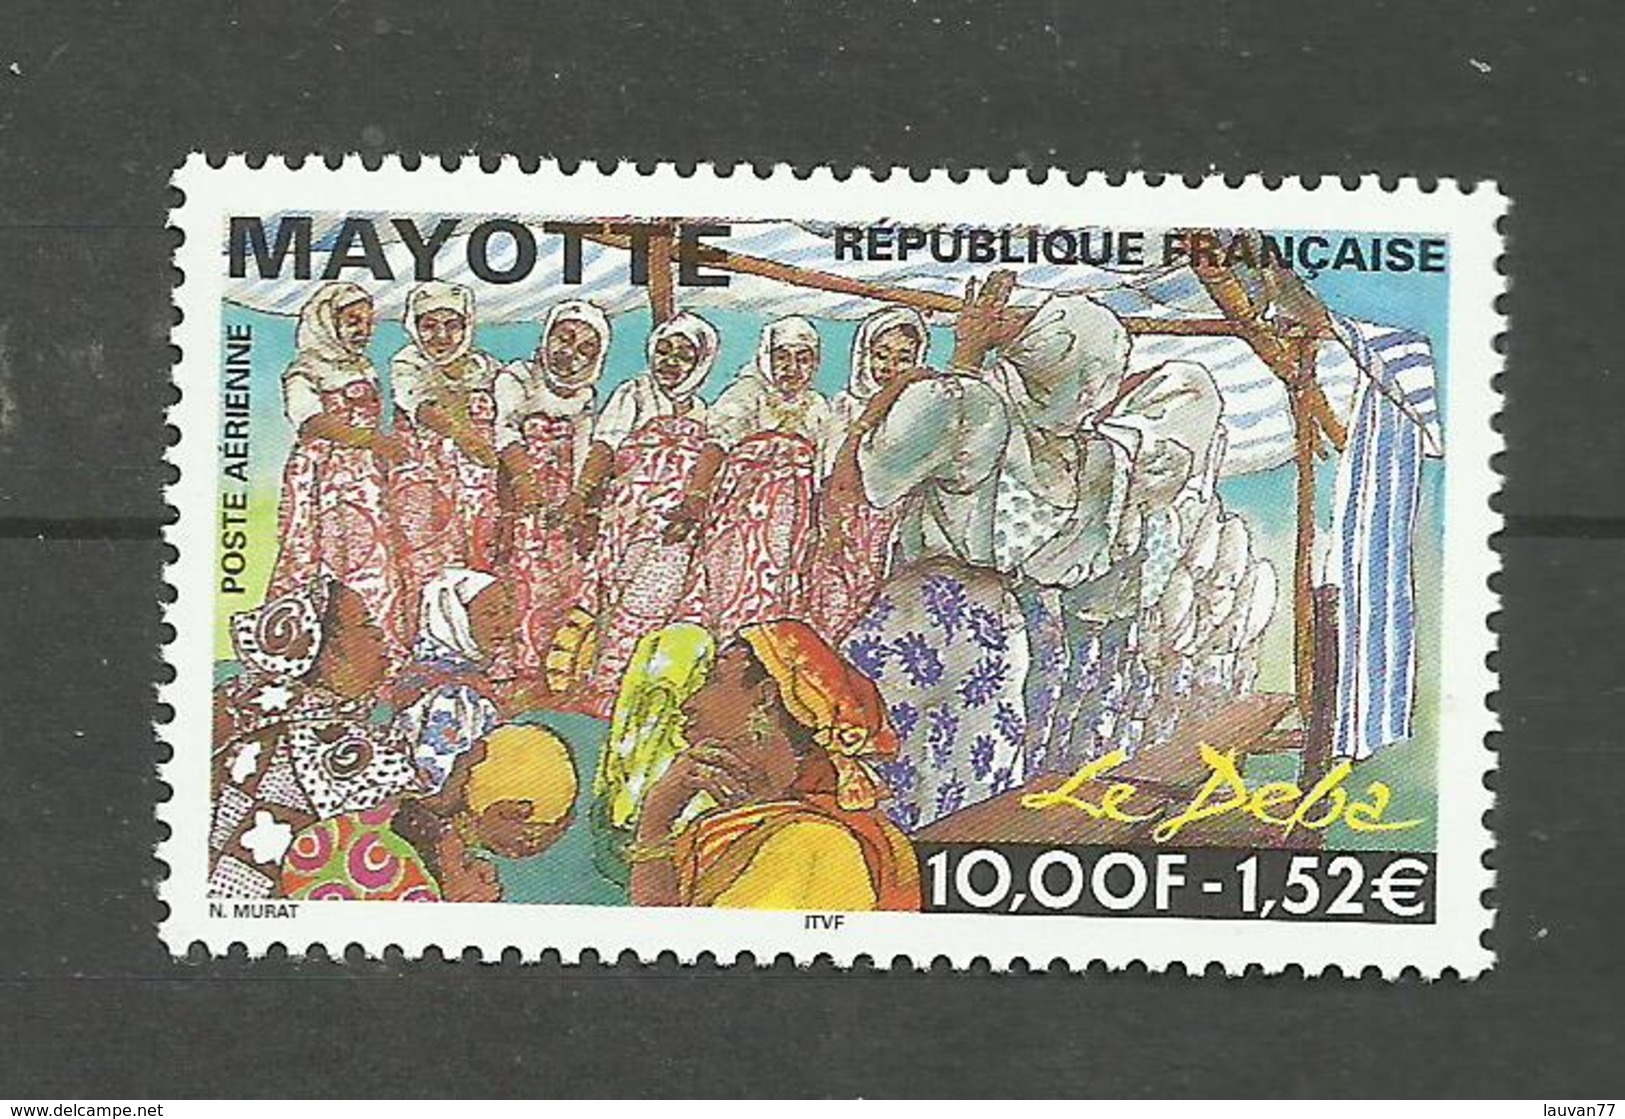 Mayotte Poste Aérienne N°4 Neuf** Cote 6.50 Euros - Airmail